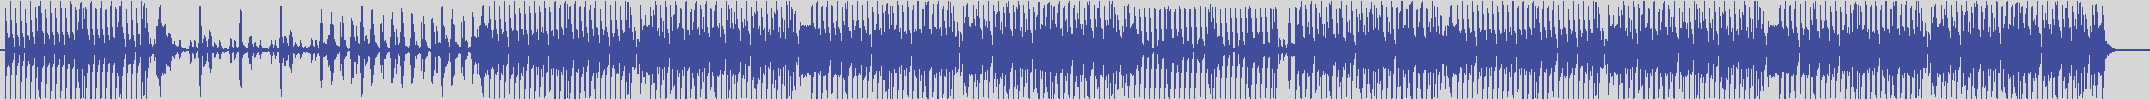 atomic_recordings [AR009] Johnny Divine - Acid & House [Undaground Mix] audio wave form